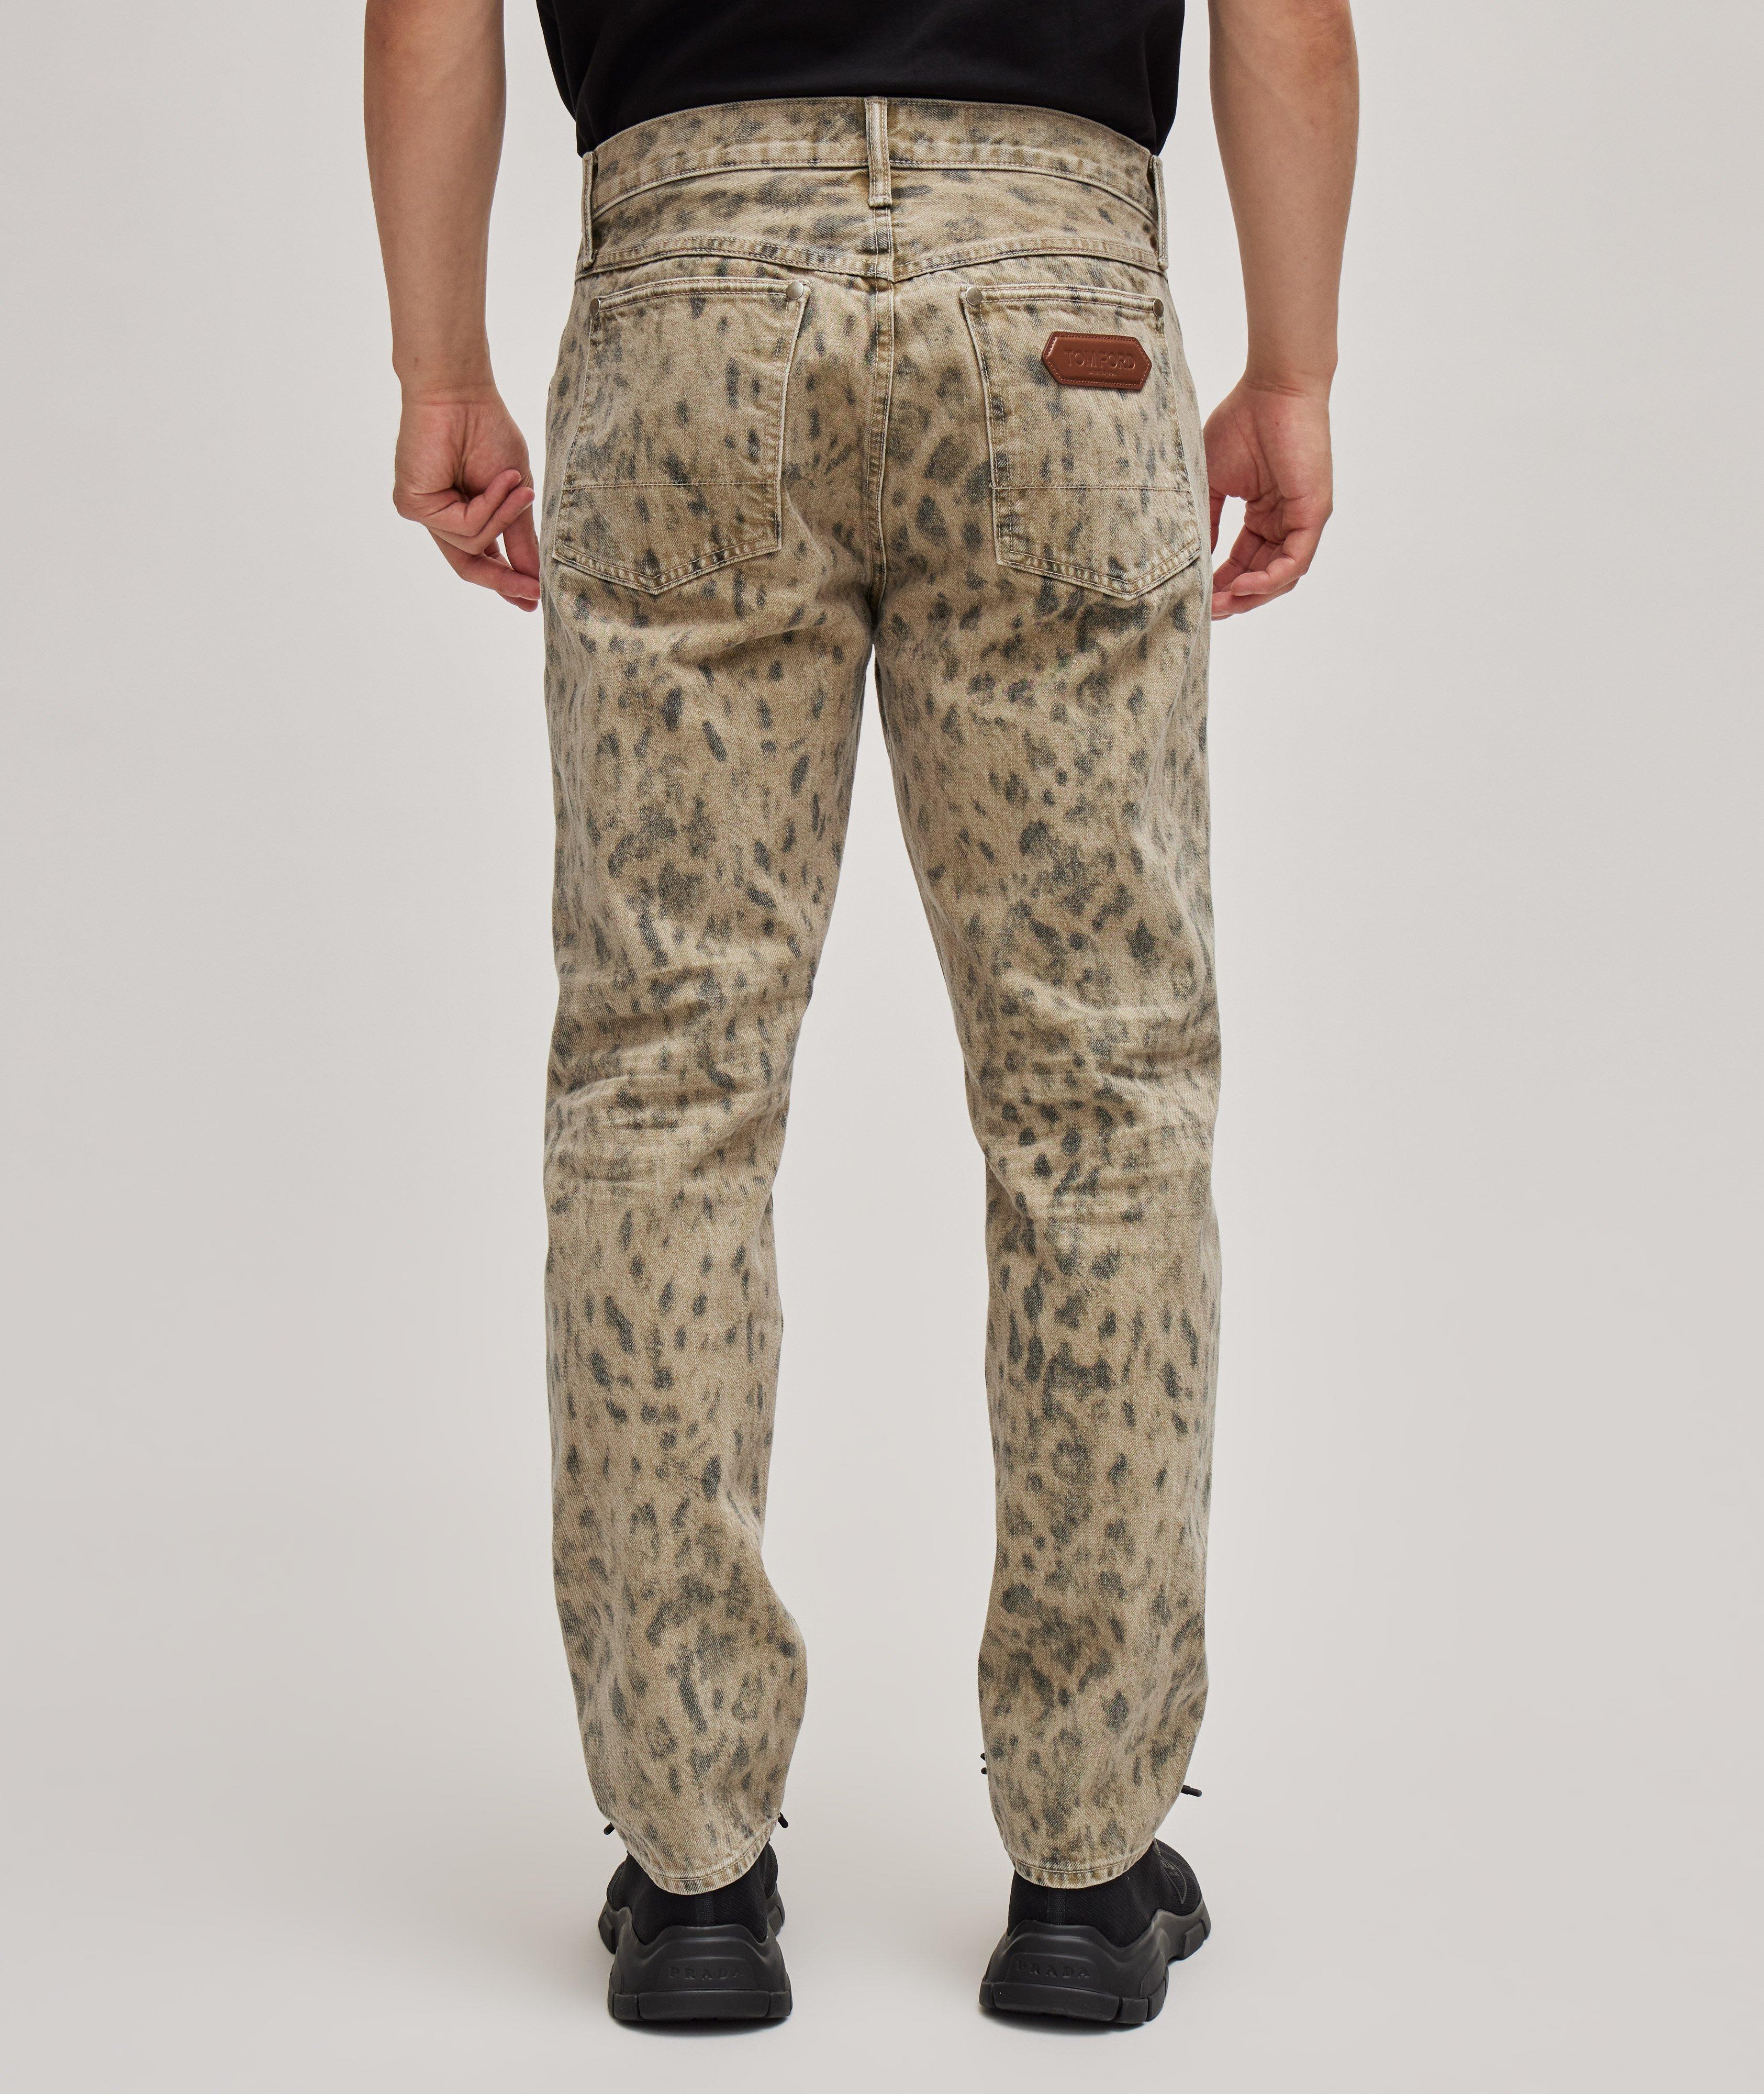 Slim-Fit Distressed Leopard Pattern Cotton Jeans image 2